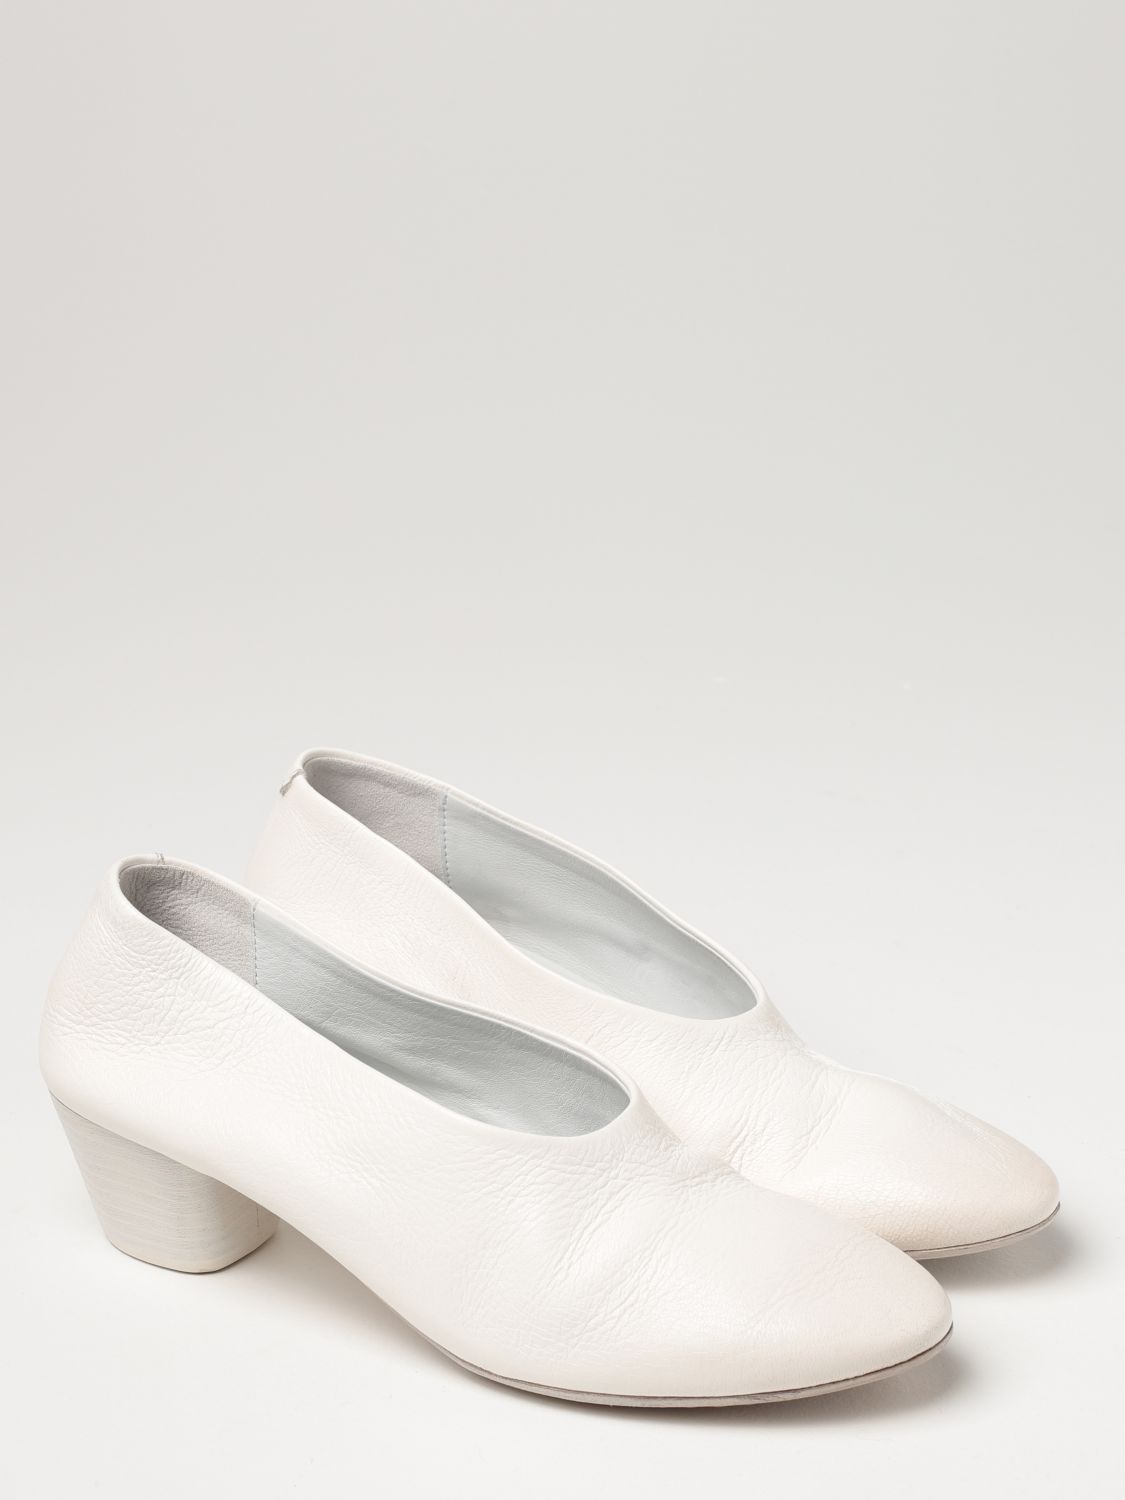 Escarpins Marsèll: Chaussures femme Marsell blanc 2